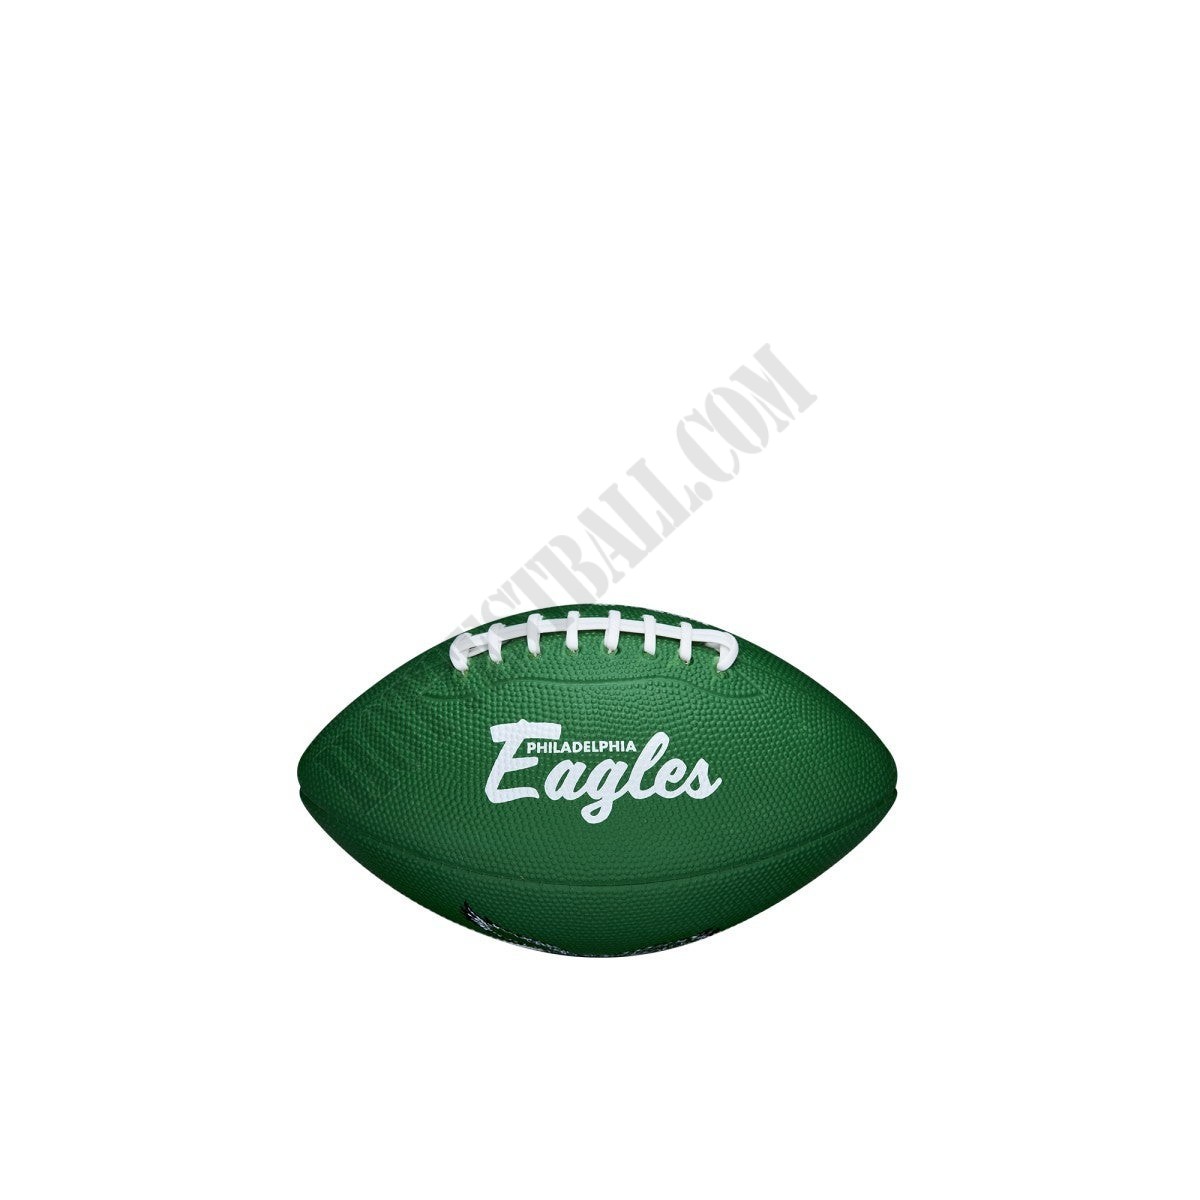 NFL Retro Mini Football - Philadelphia Eagles ● Wilson Promotions - NFL Retro Mini Football - Philadelphia Eagles ● Wilson Promotions